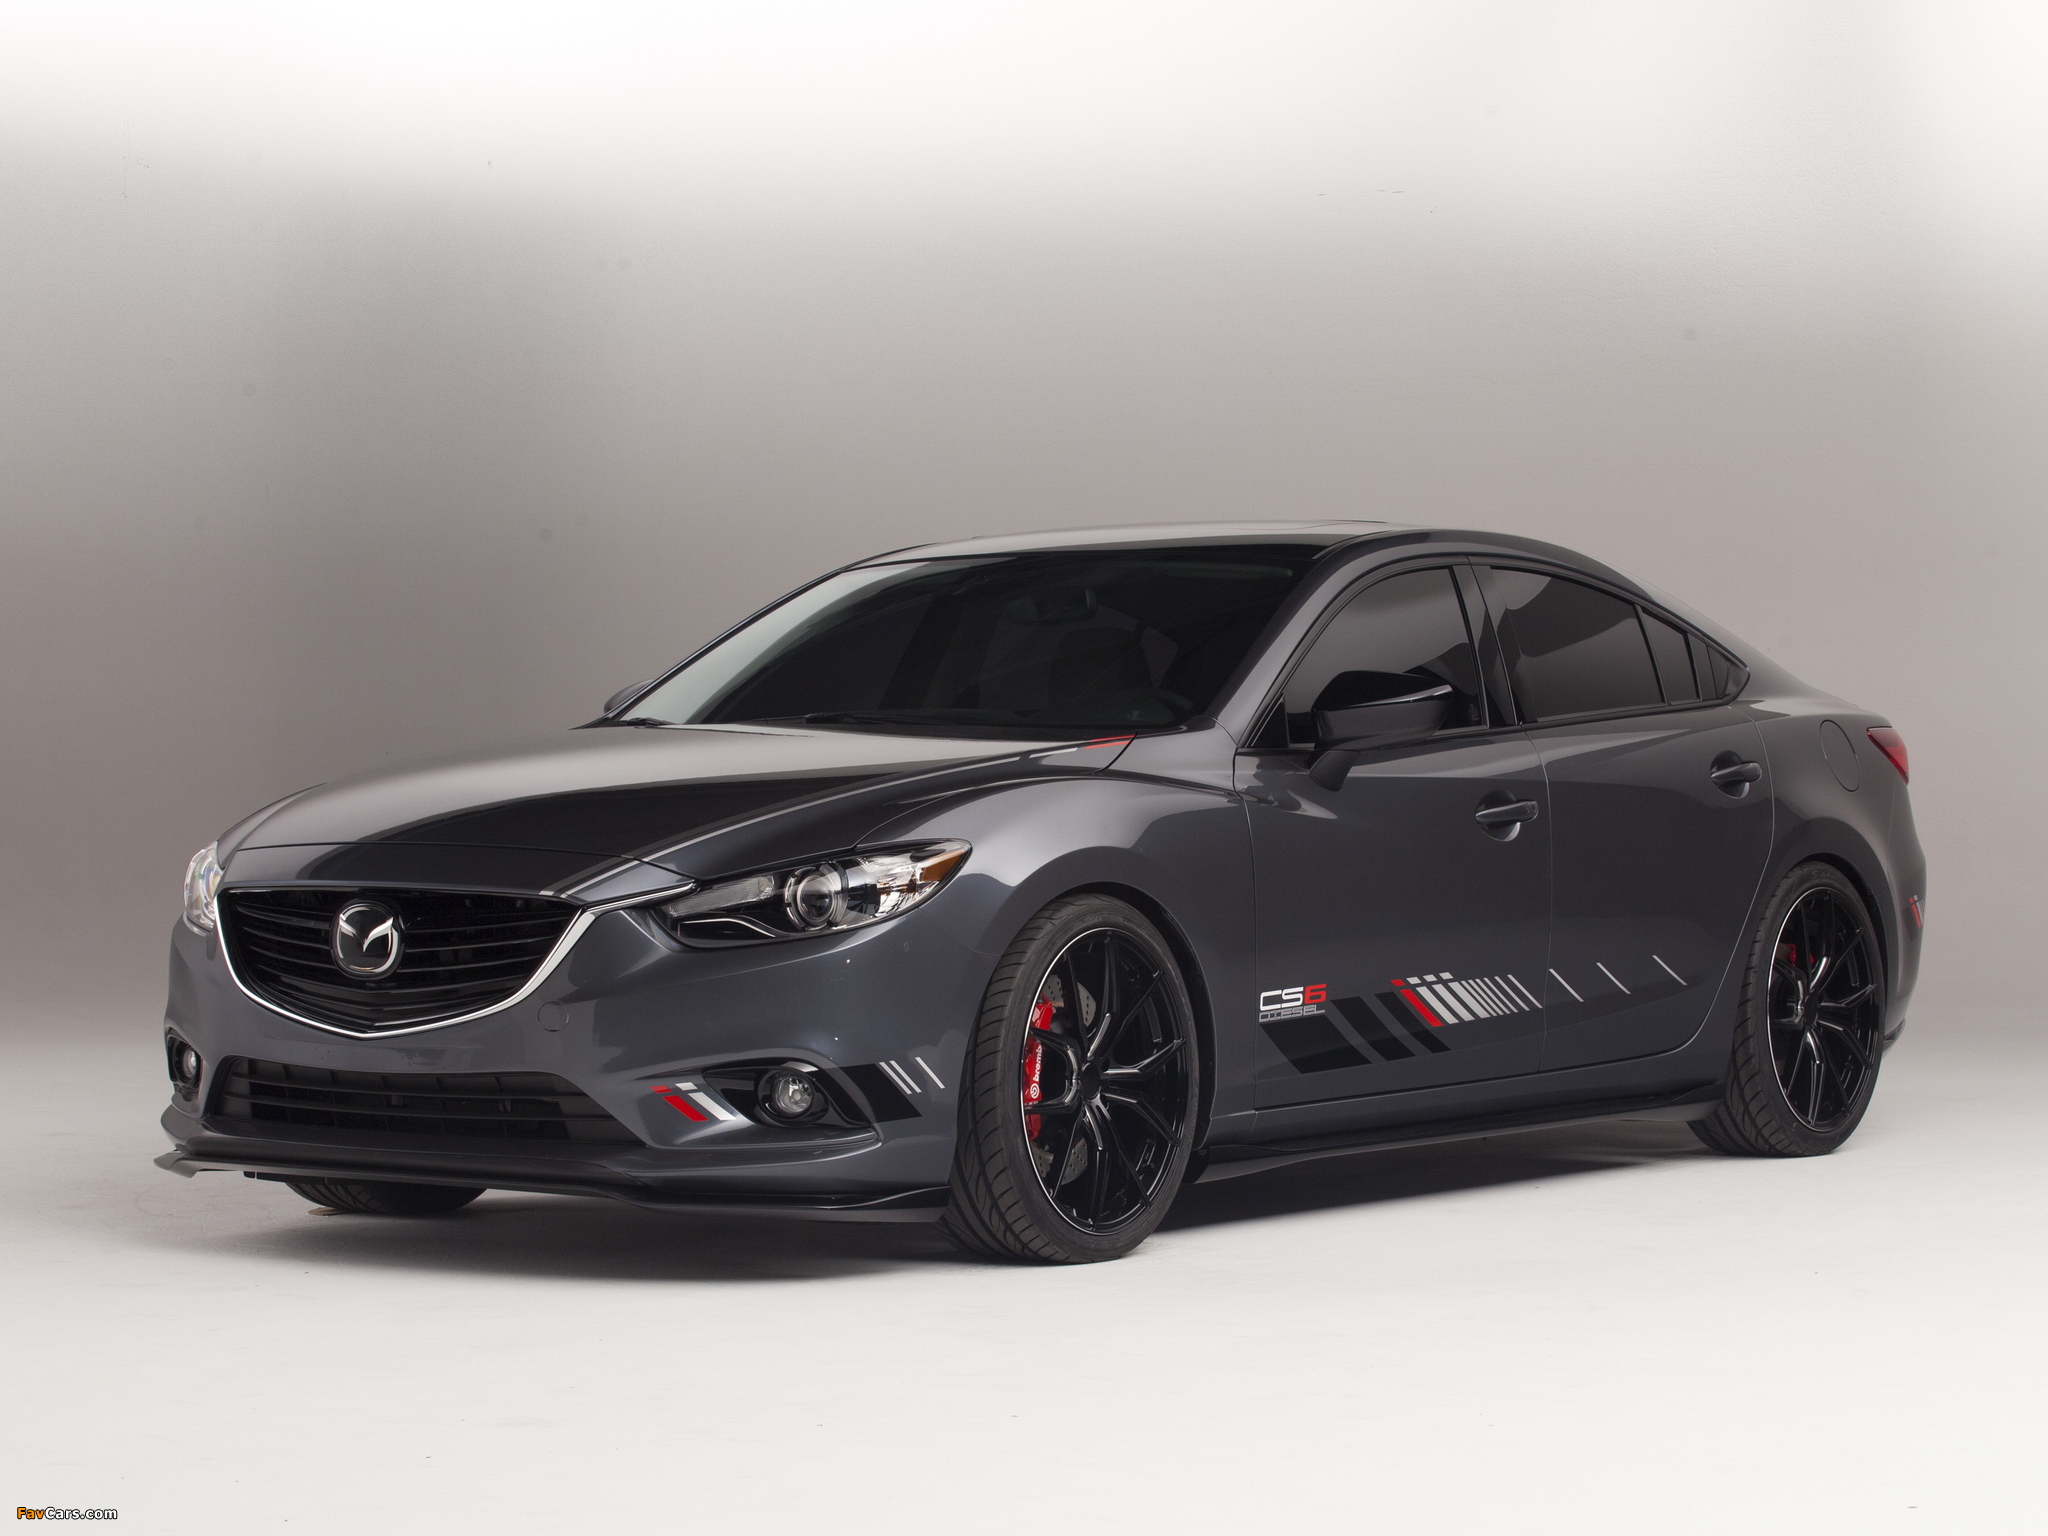 Mazda Club Sport 6 Concept (GJ) 2013 pictures (2048 x 1536)